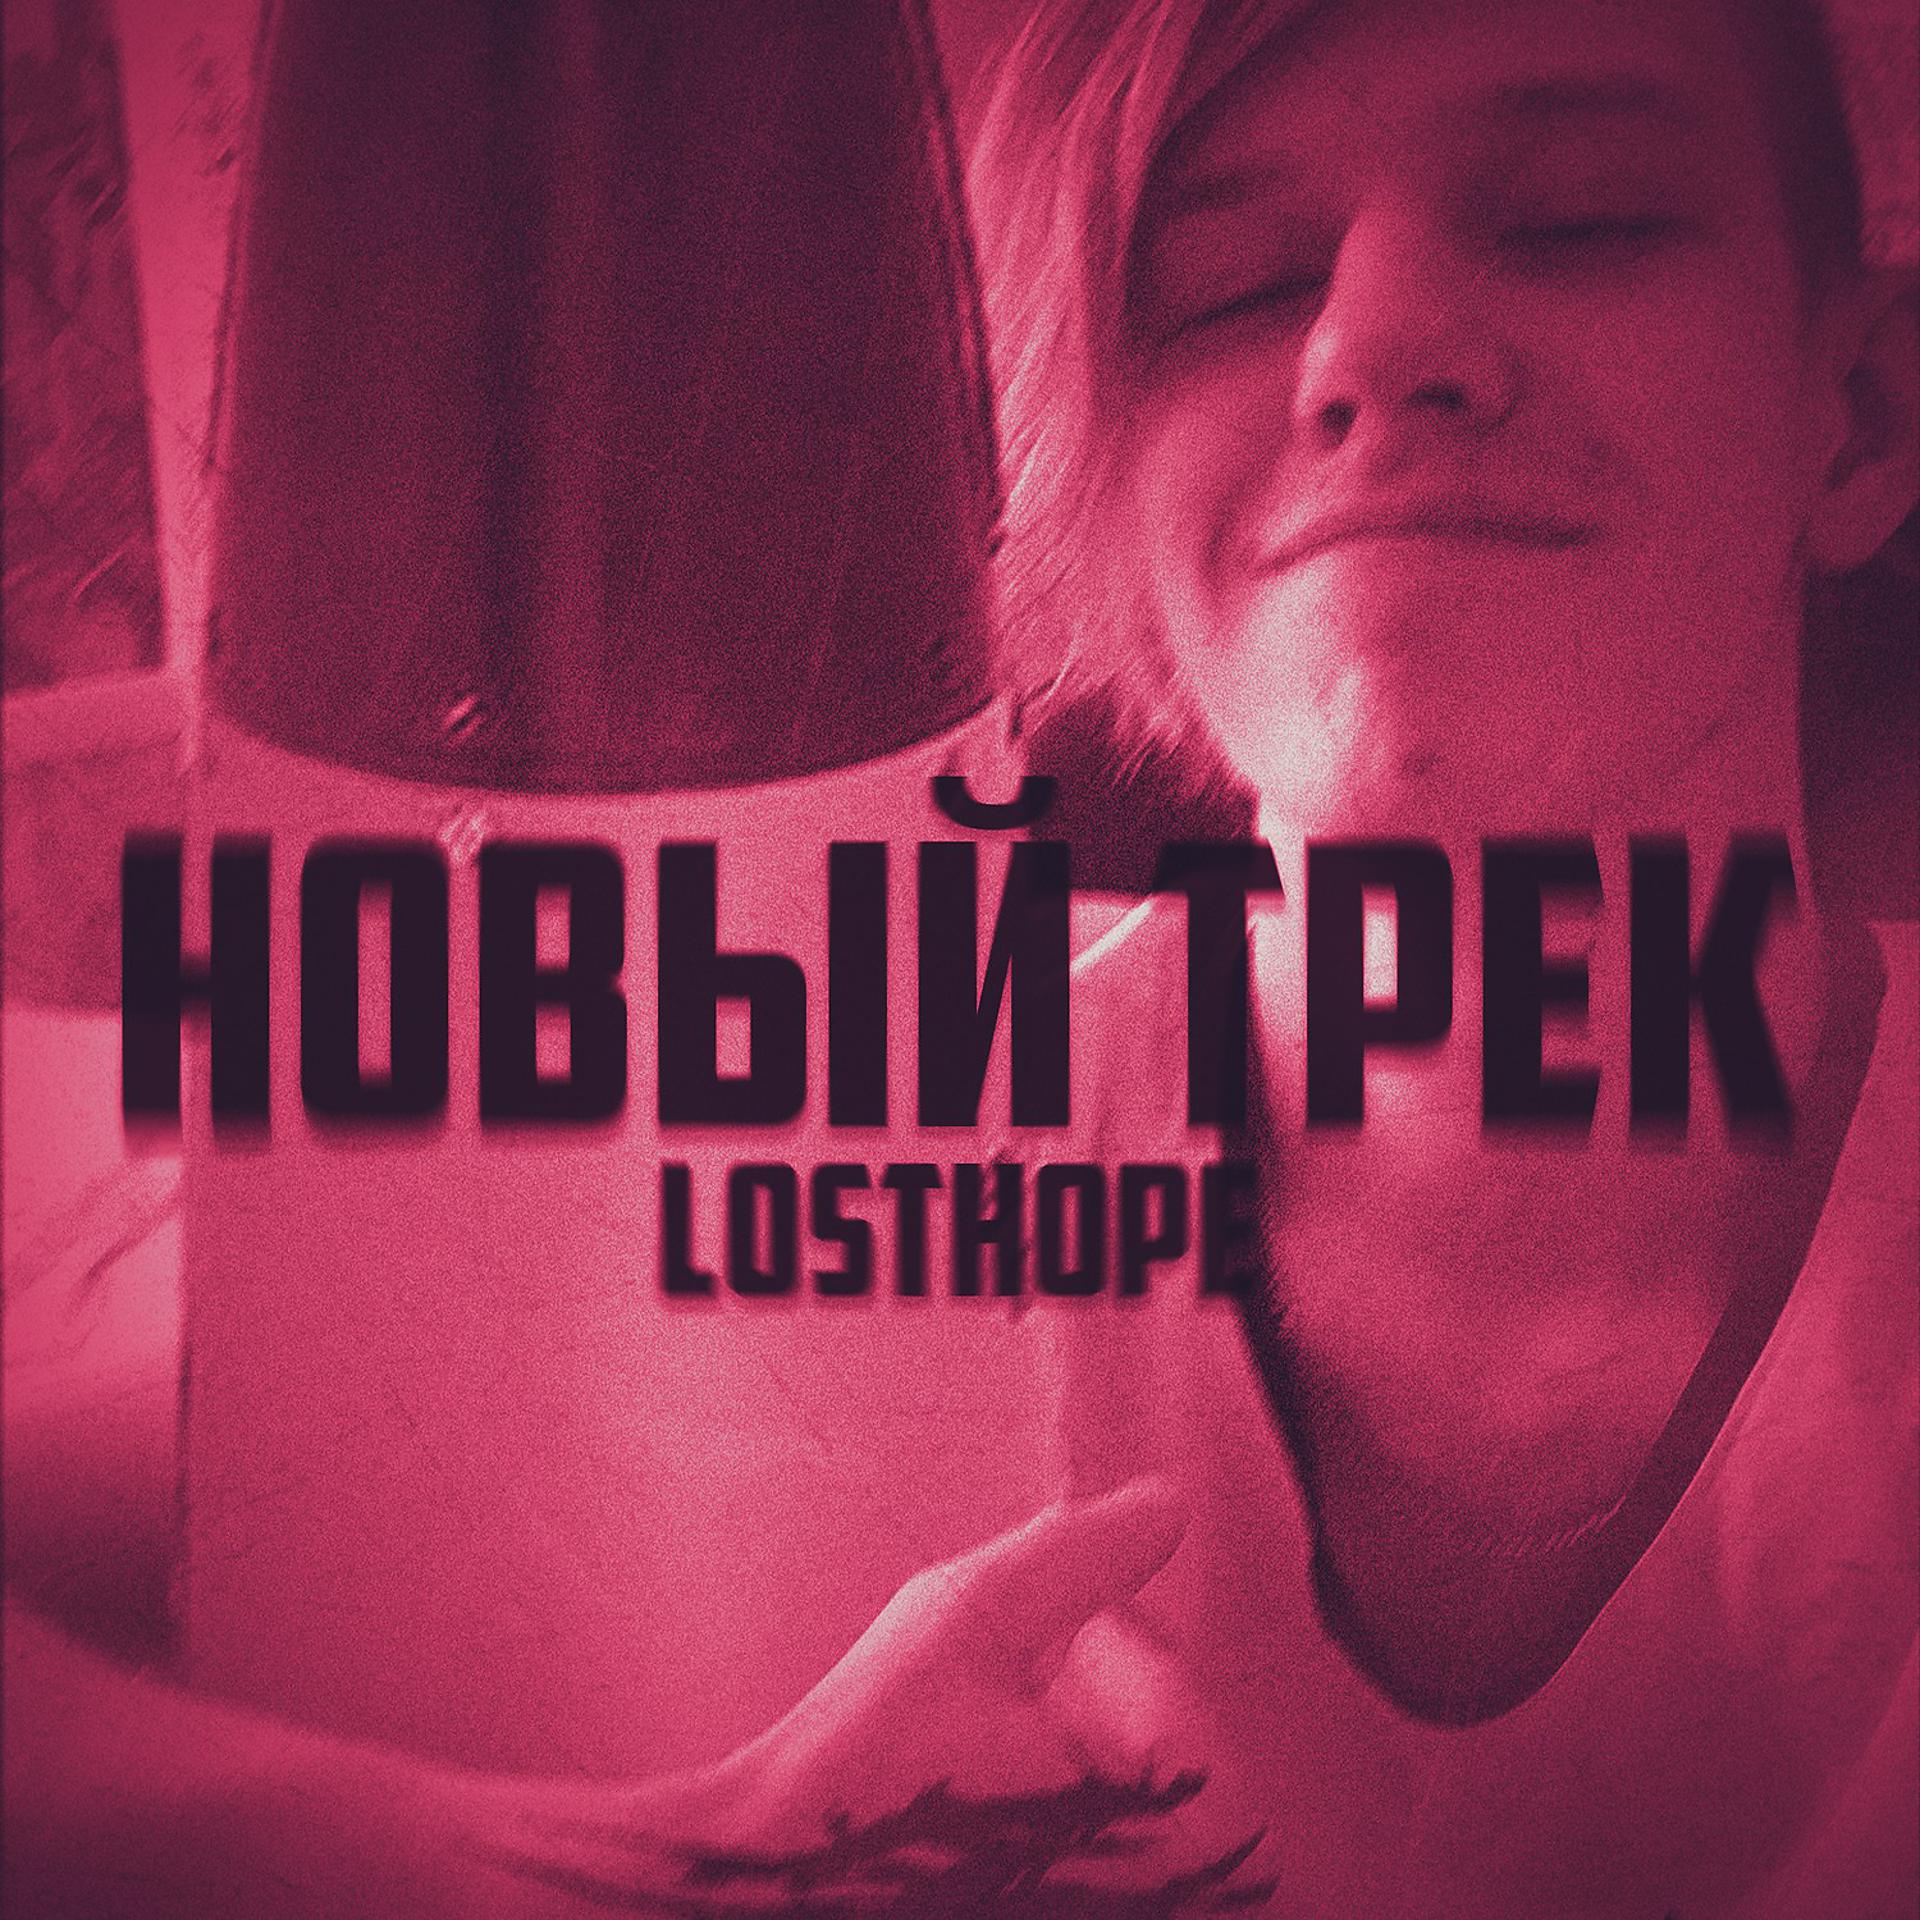 Постер к треку losthope - Новый трек